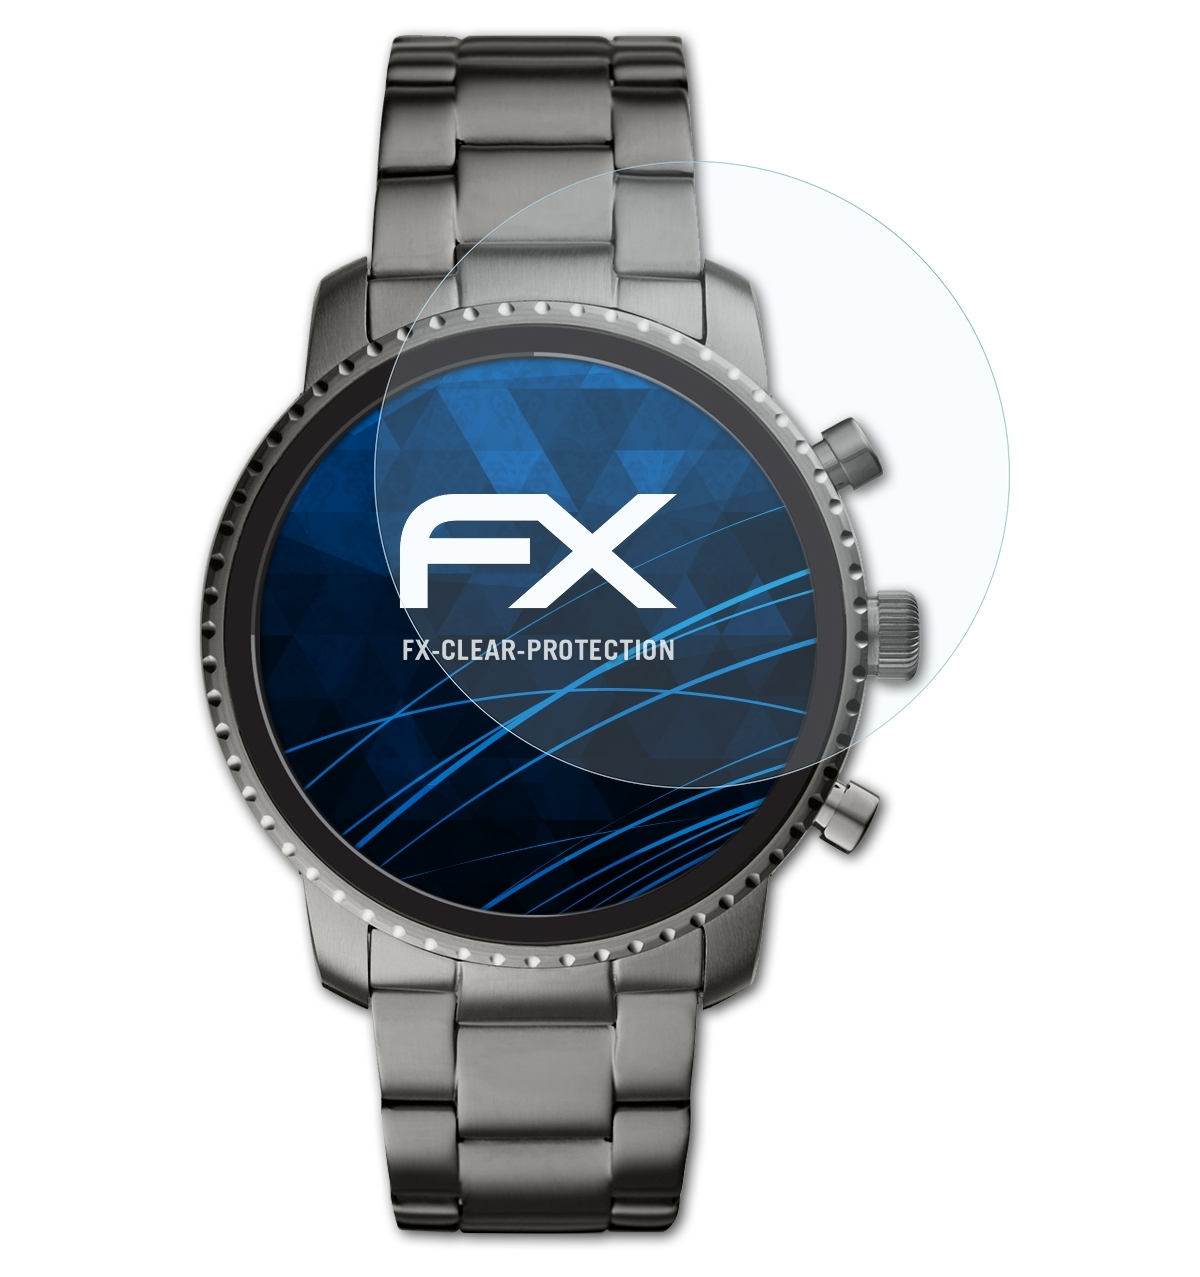 ATFOLIX 3x (4. Generation)) Fossil HR FX-Clear Q Explorist Displayschutz(für